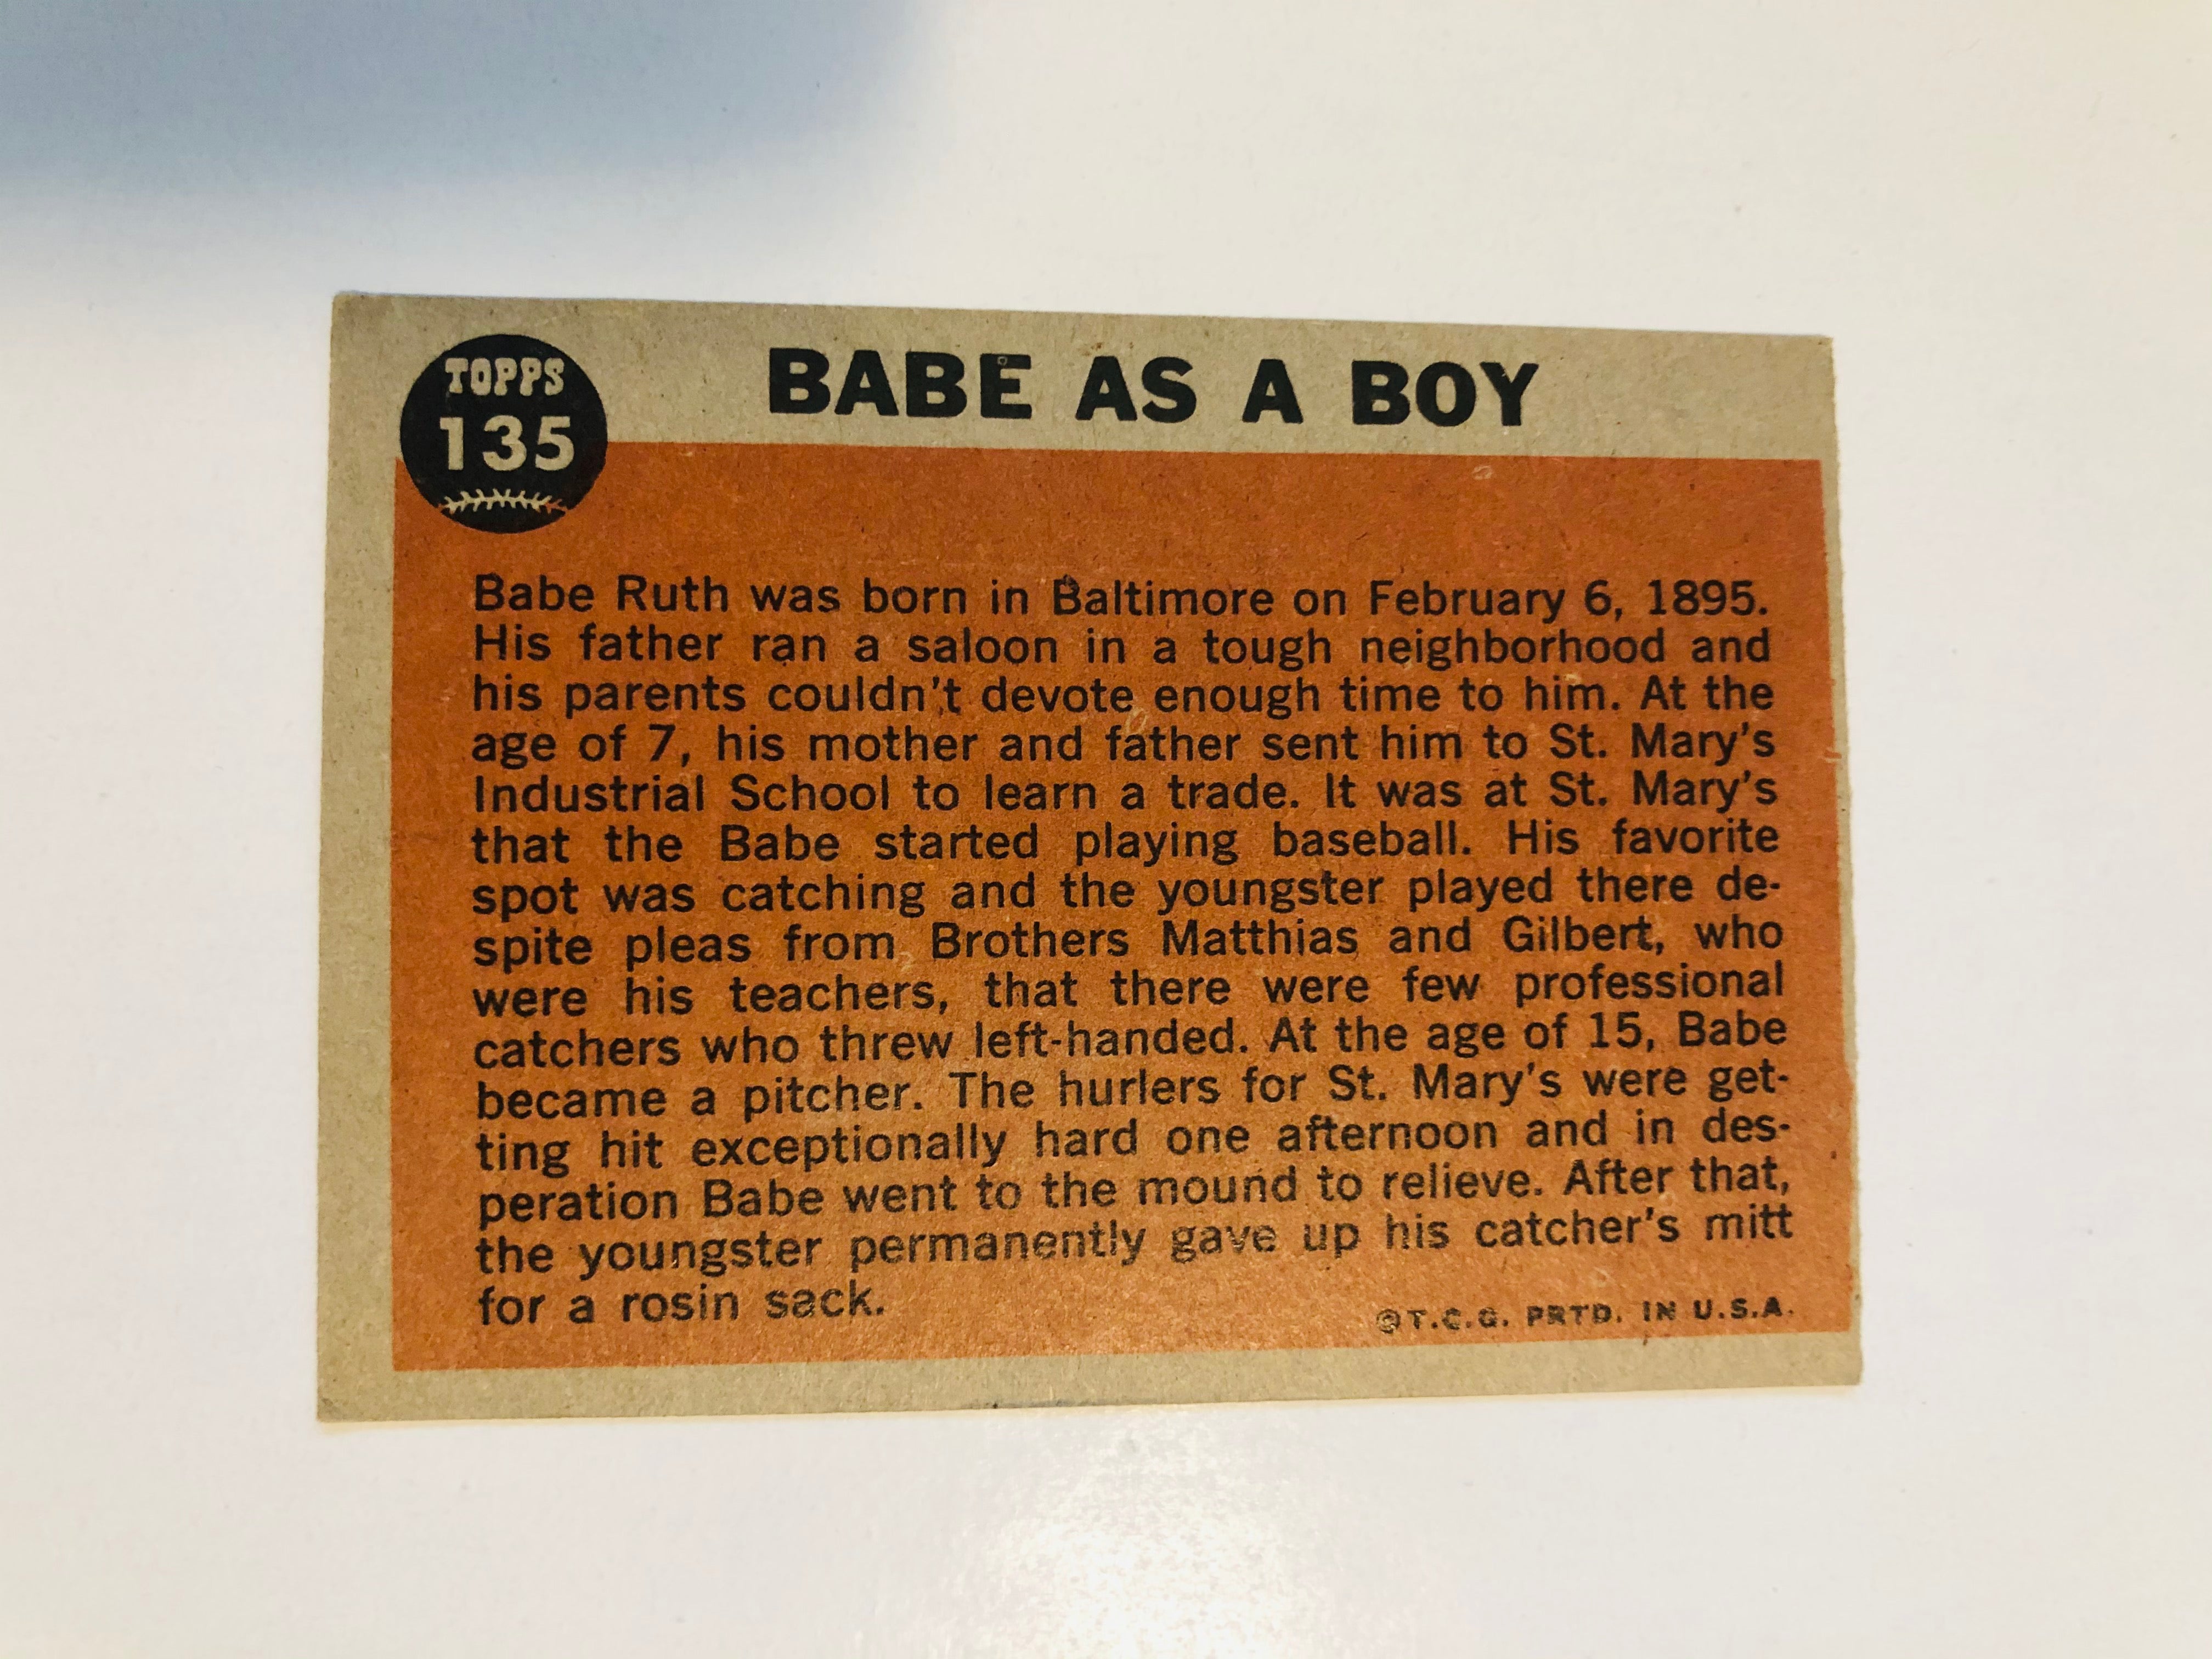 Babe Ruth Topps baseball card as a boy player 1960